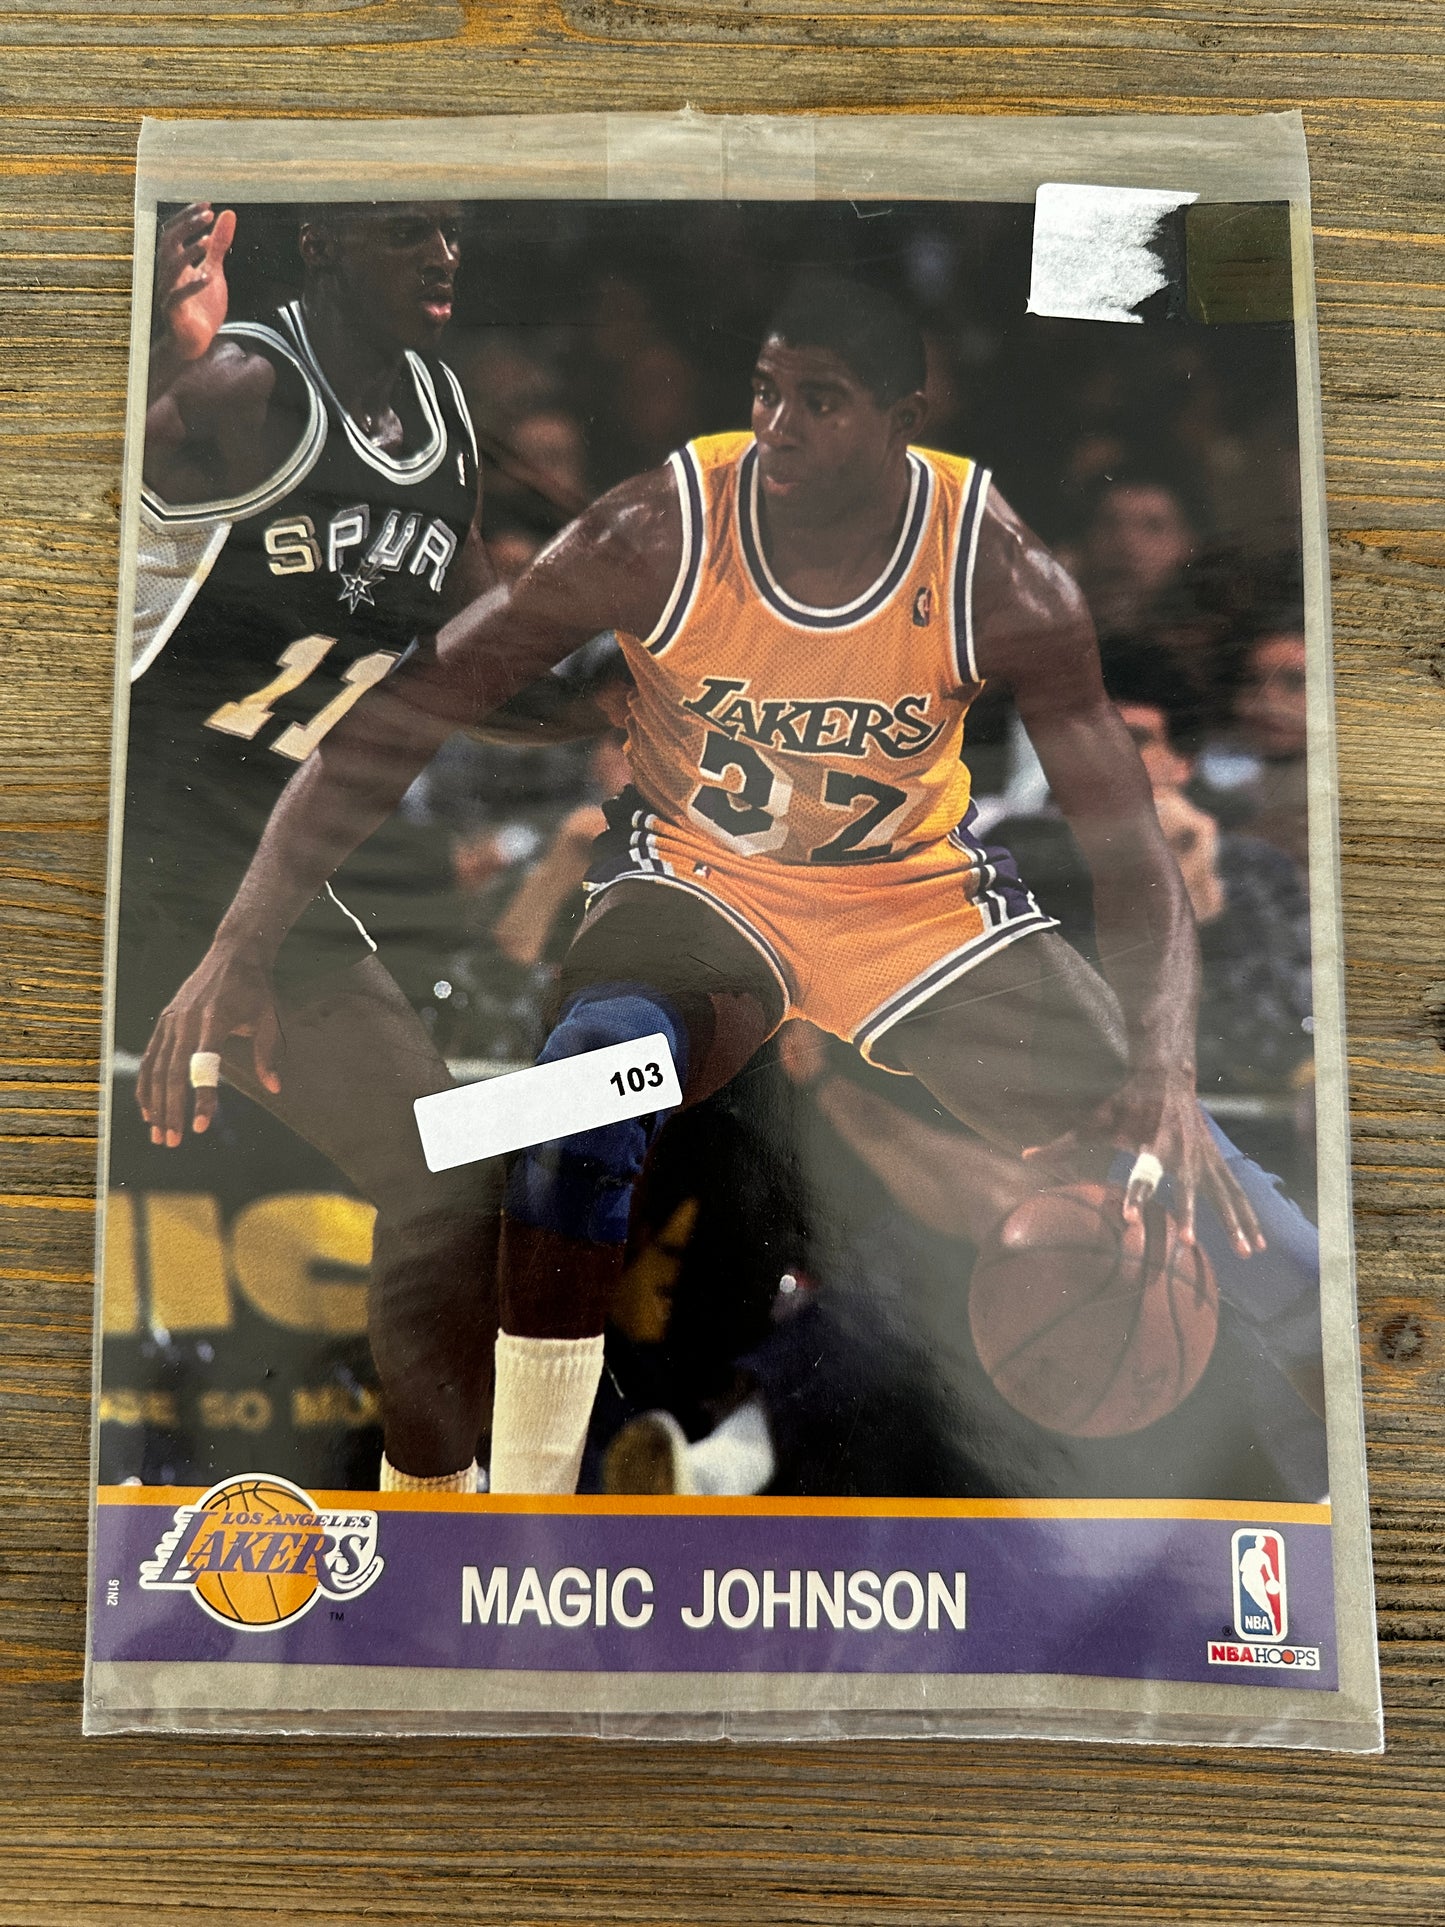 1990 sealed Hoops Magic Johnson 8x10 NBA photo